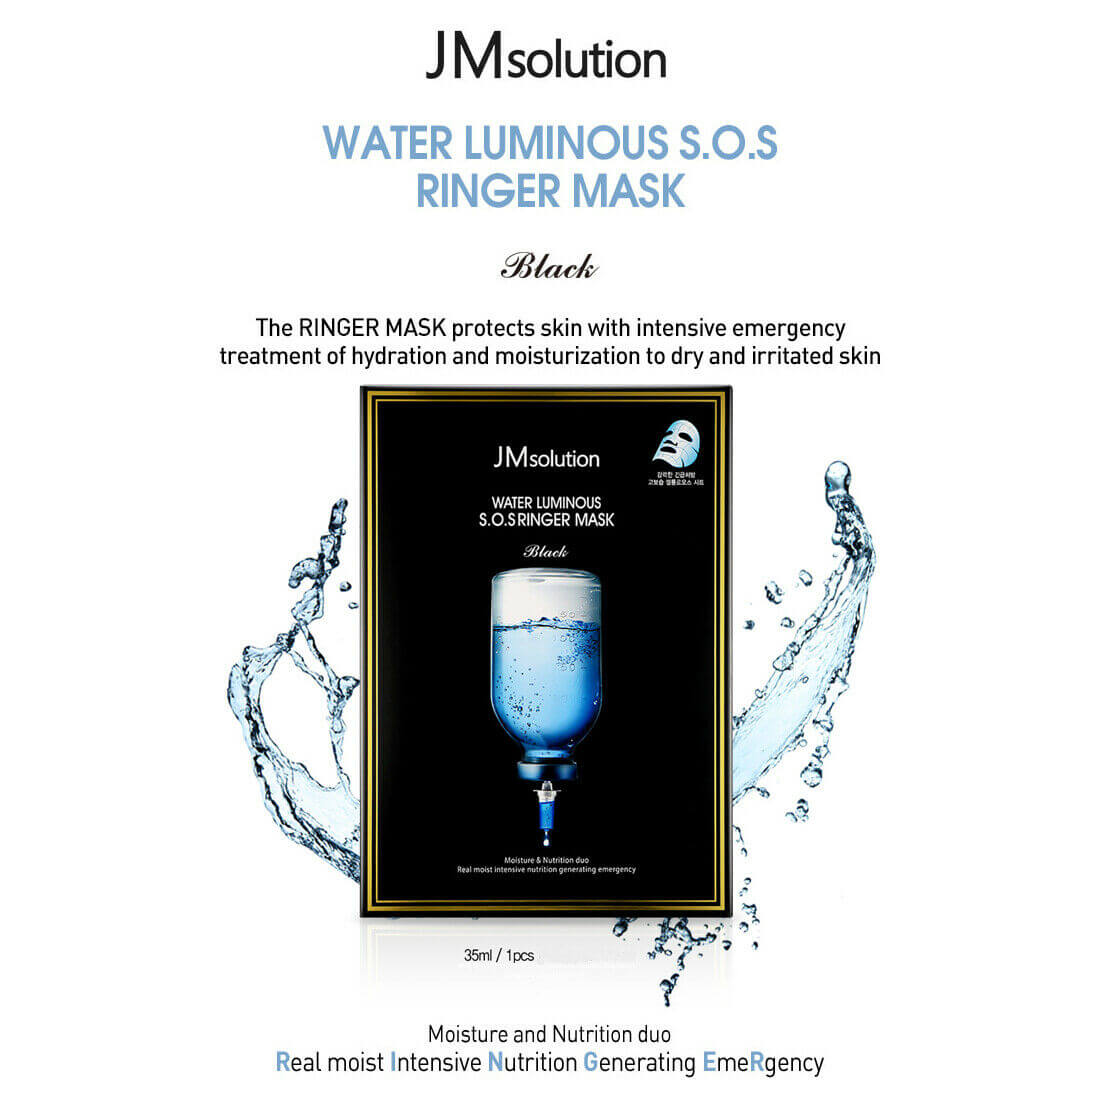 Jmsolution ,Water Luminous Mask , มาสก์หน้า , มาสก์หน้า Jmsolution, jm solution mask ราคา ,jm solution mask pantip, jm solution mask รีวิว, jm solution mask วิธีใช้, jm solution mask honey รีวิว ,jm solution mask best, jm solution mask ดีไหม, jm solution water luminous mask รีวิว